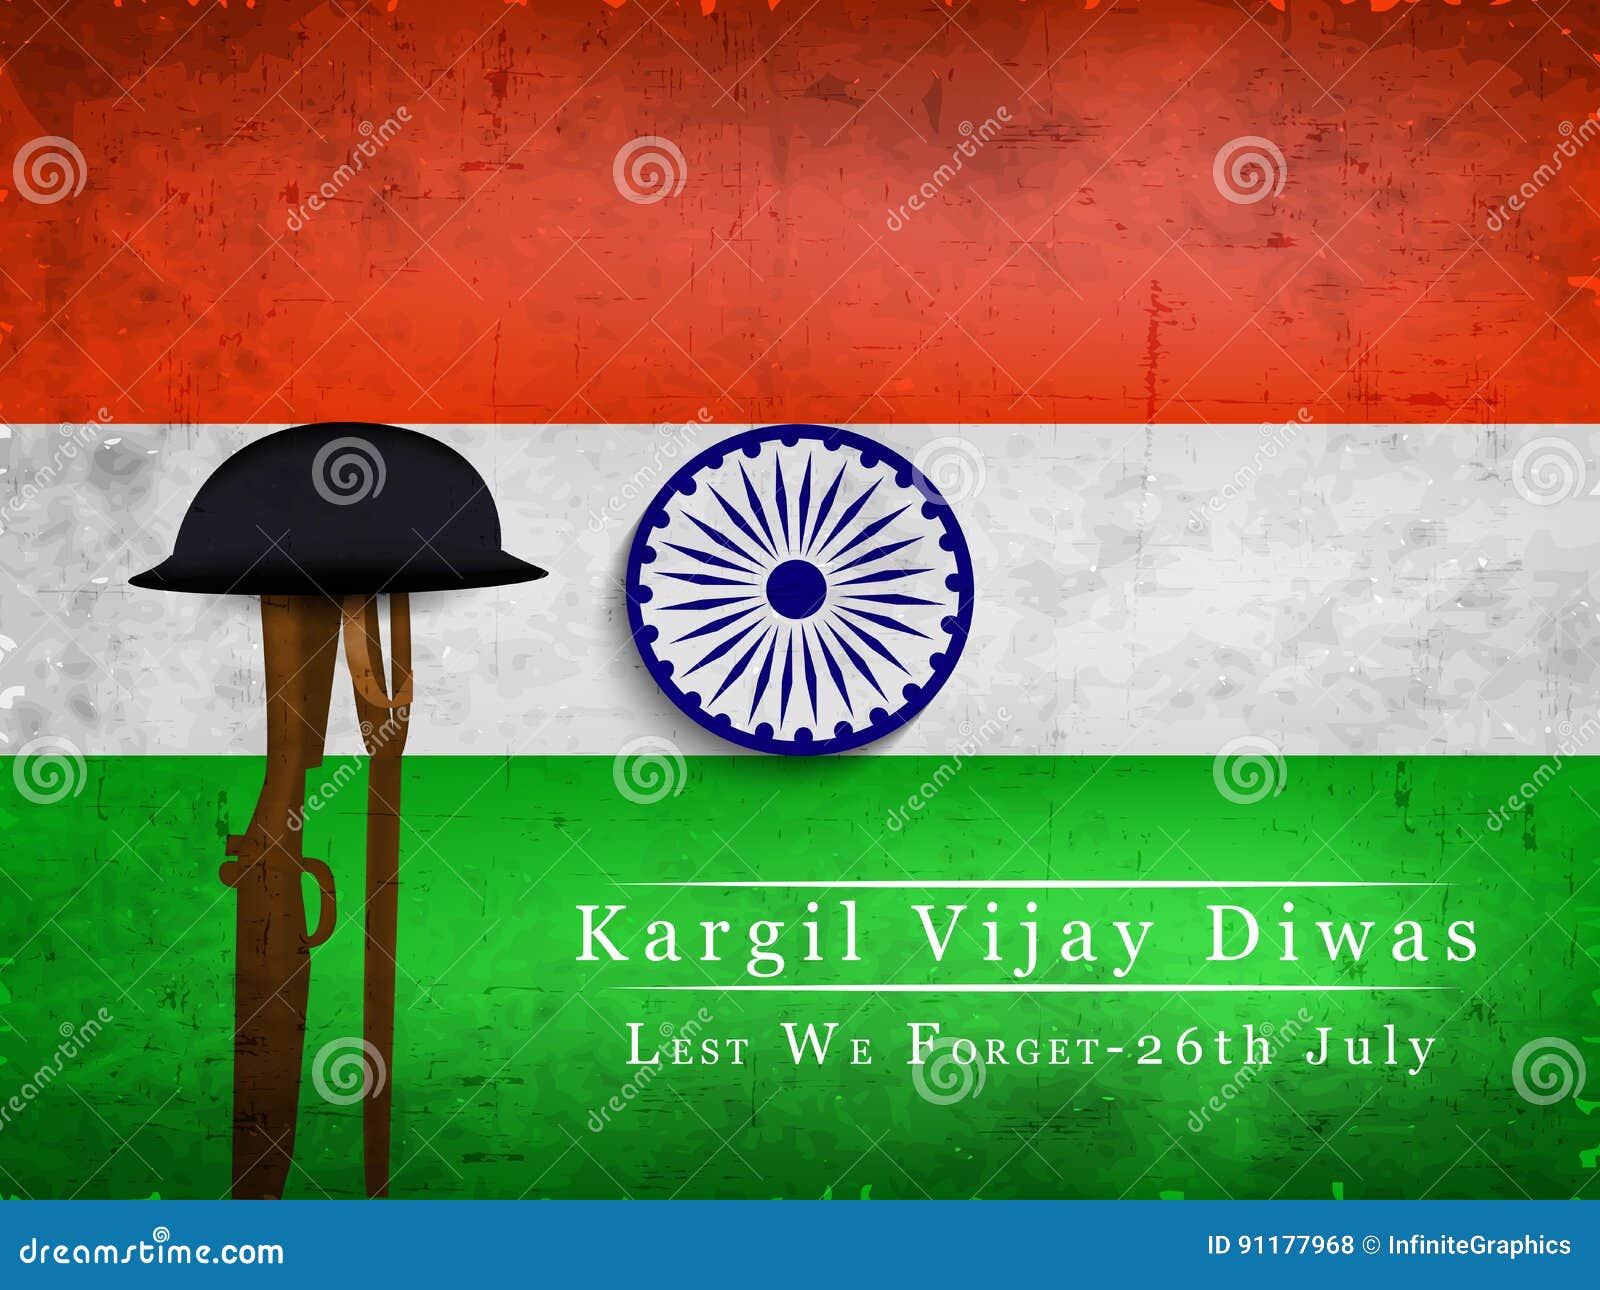 Kargil Vijay diwas Template | PosterMyWall